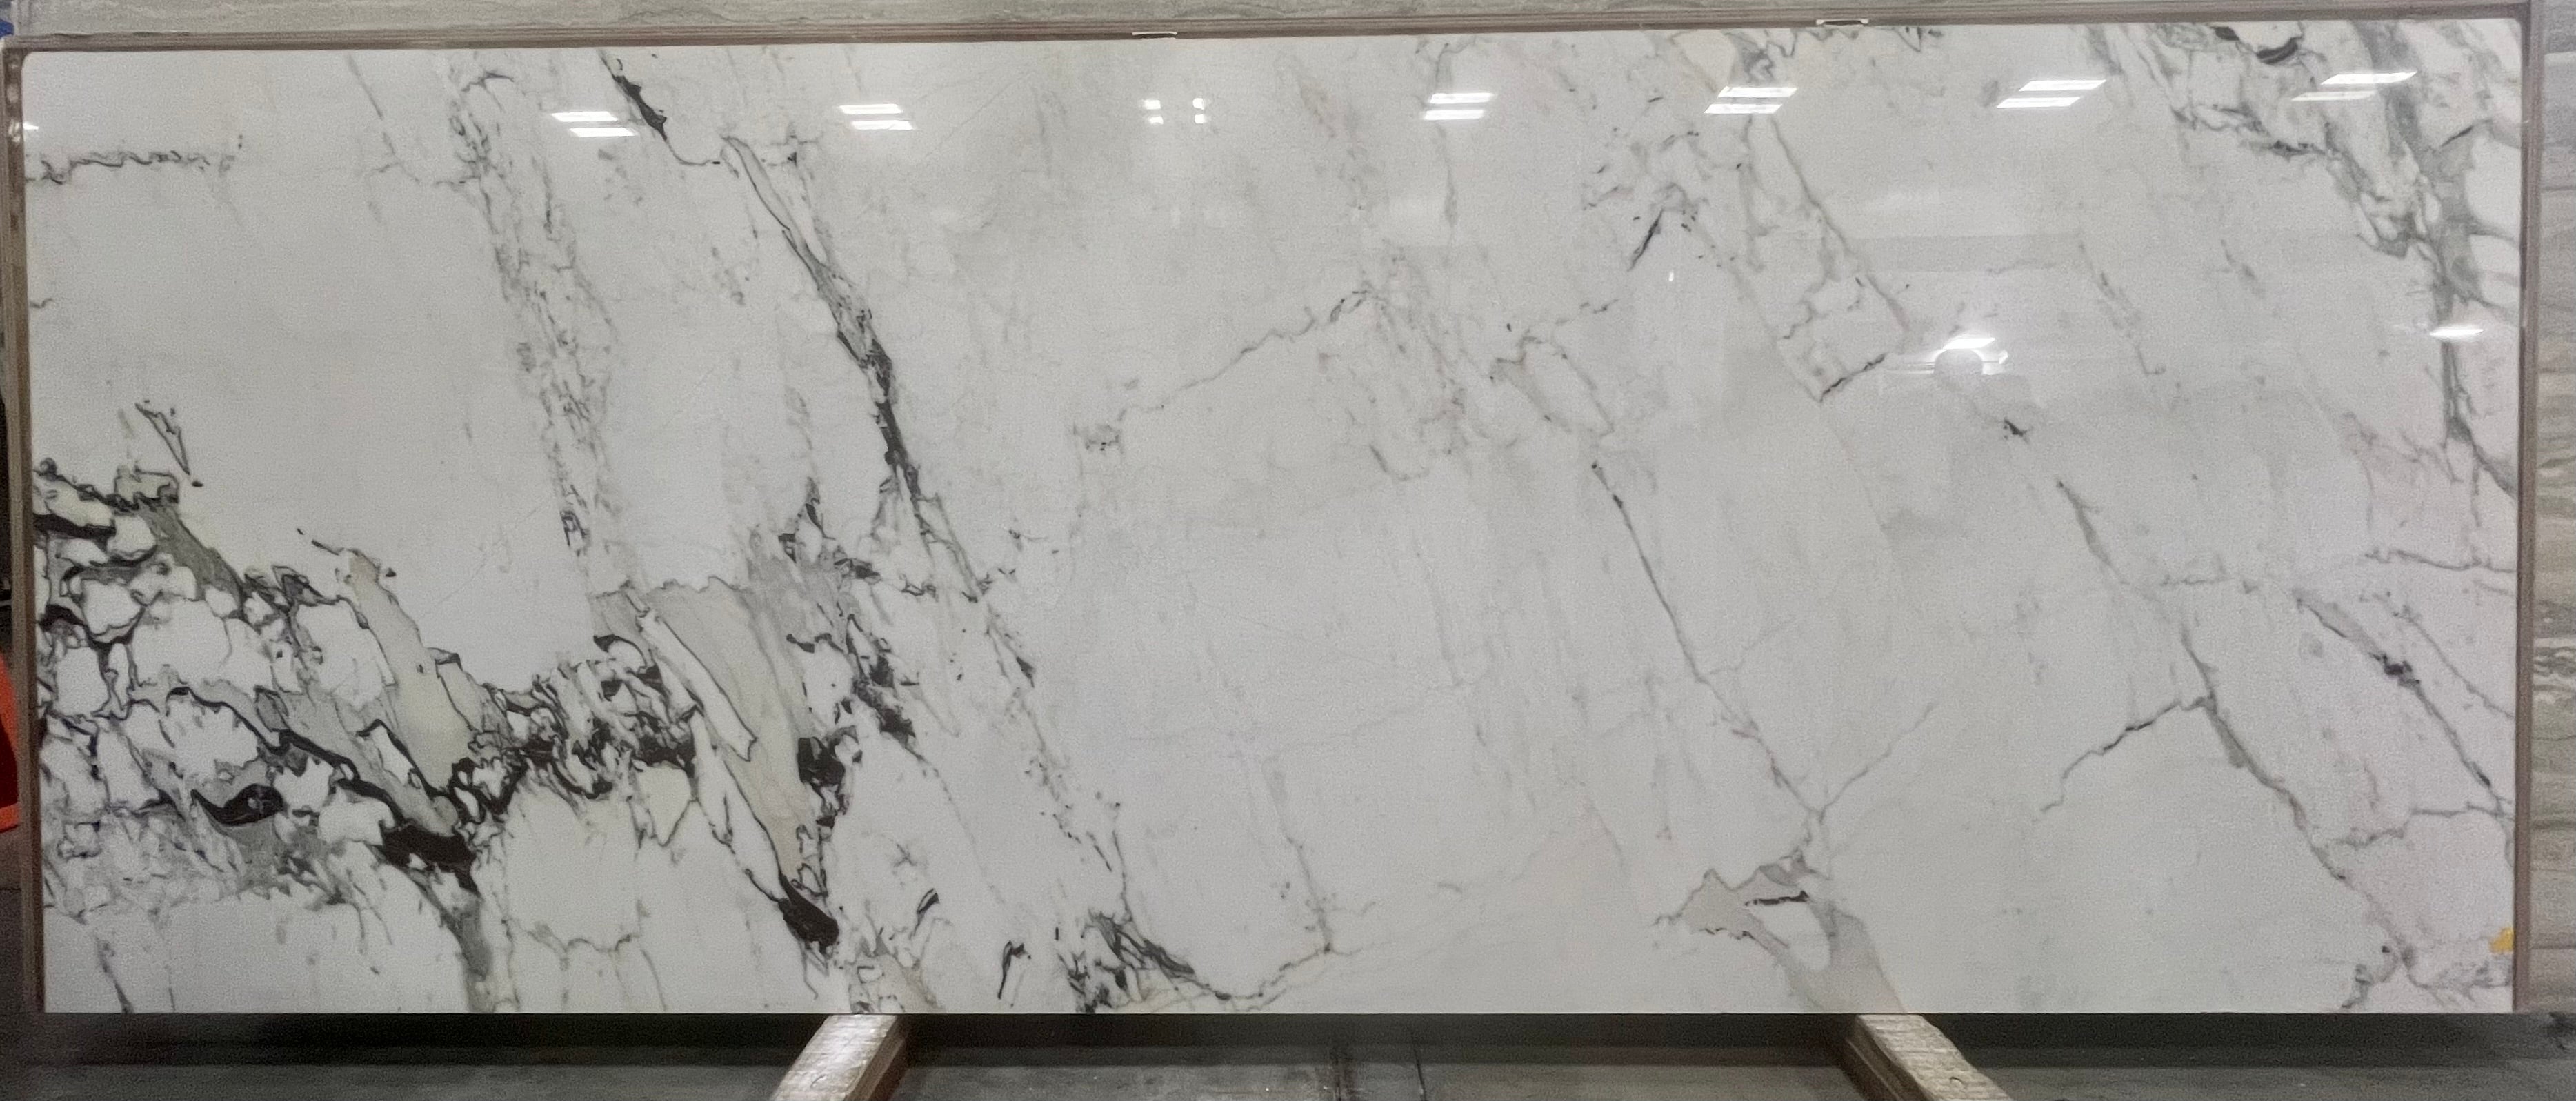  Breccia Capraia Marble Slab 3/4  Polished Stone - P5721#11 -  34x119 